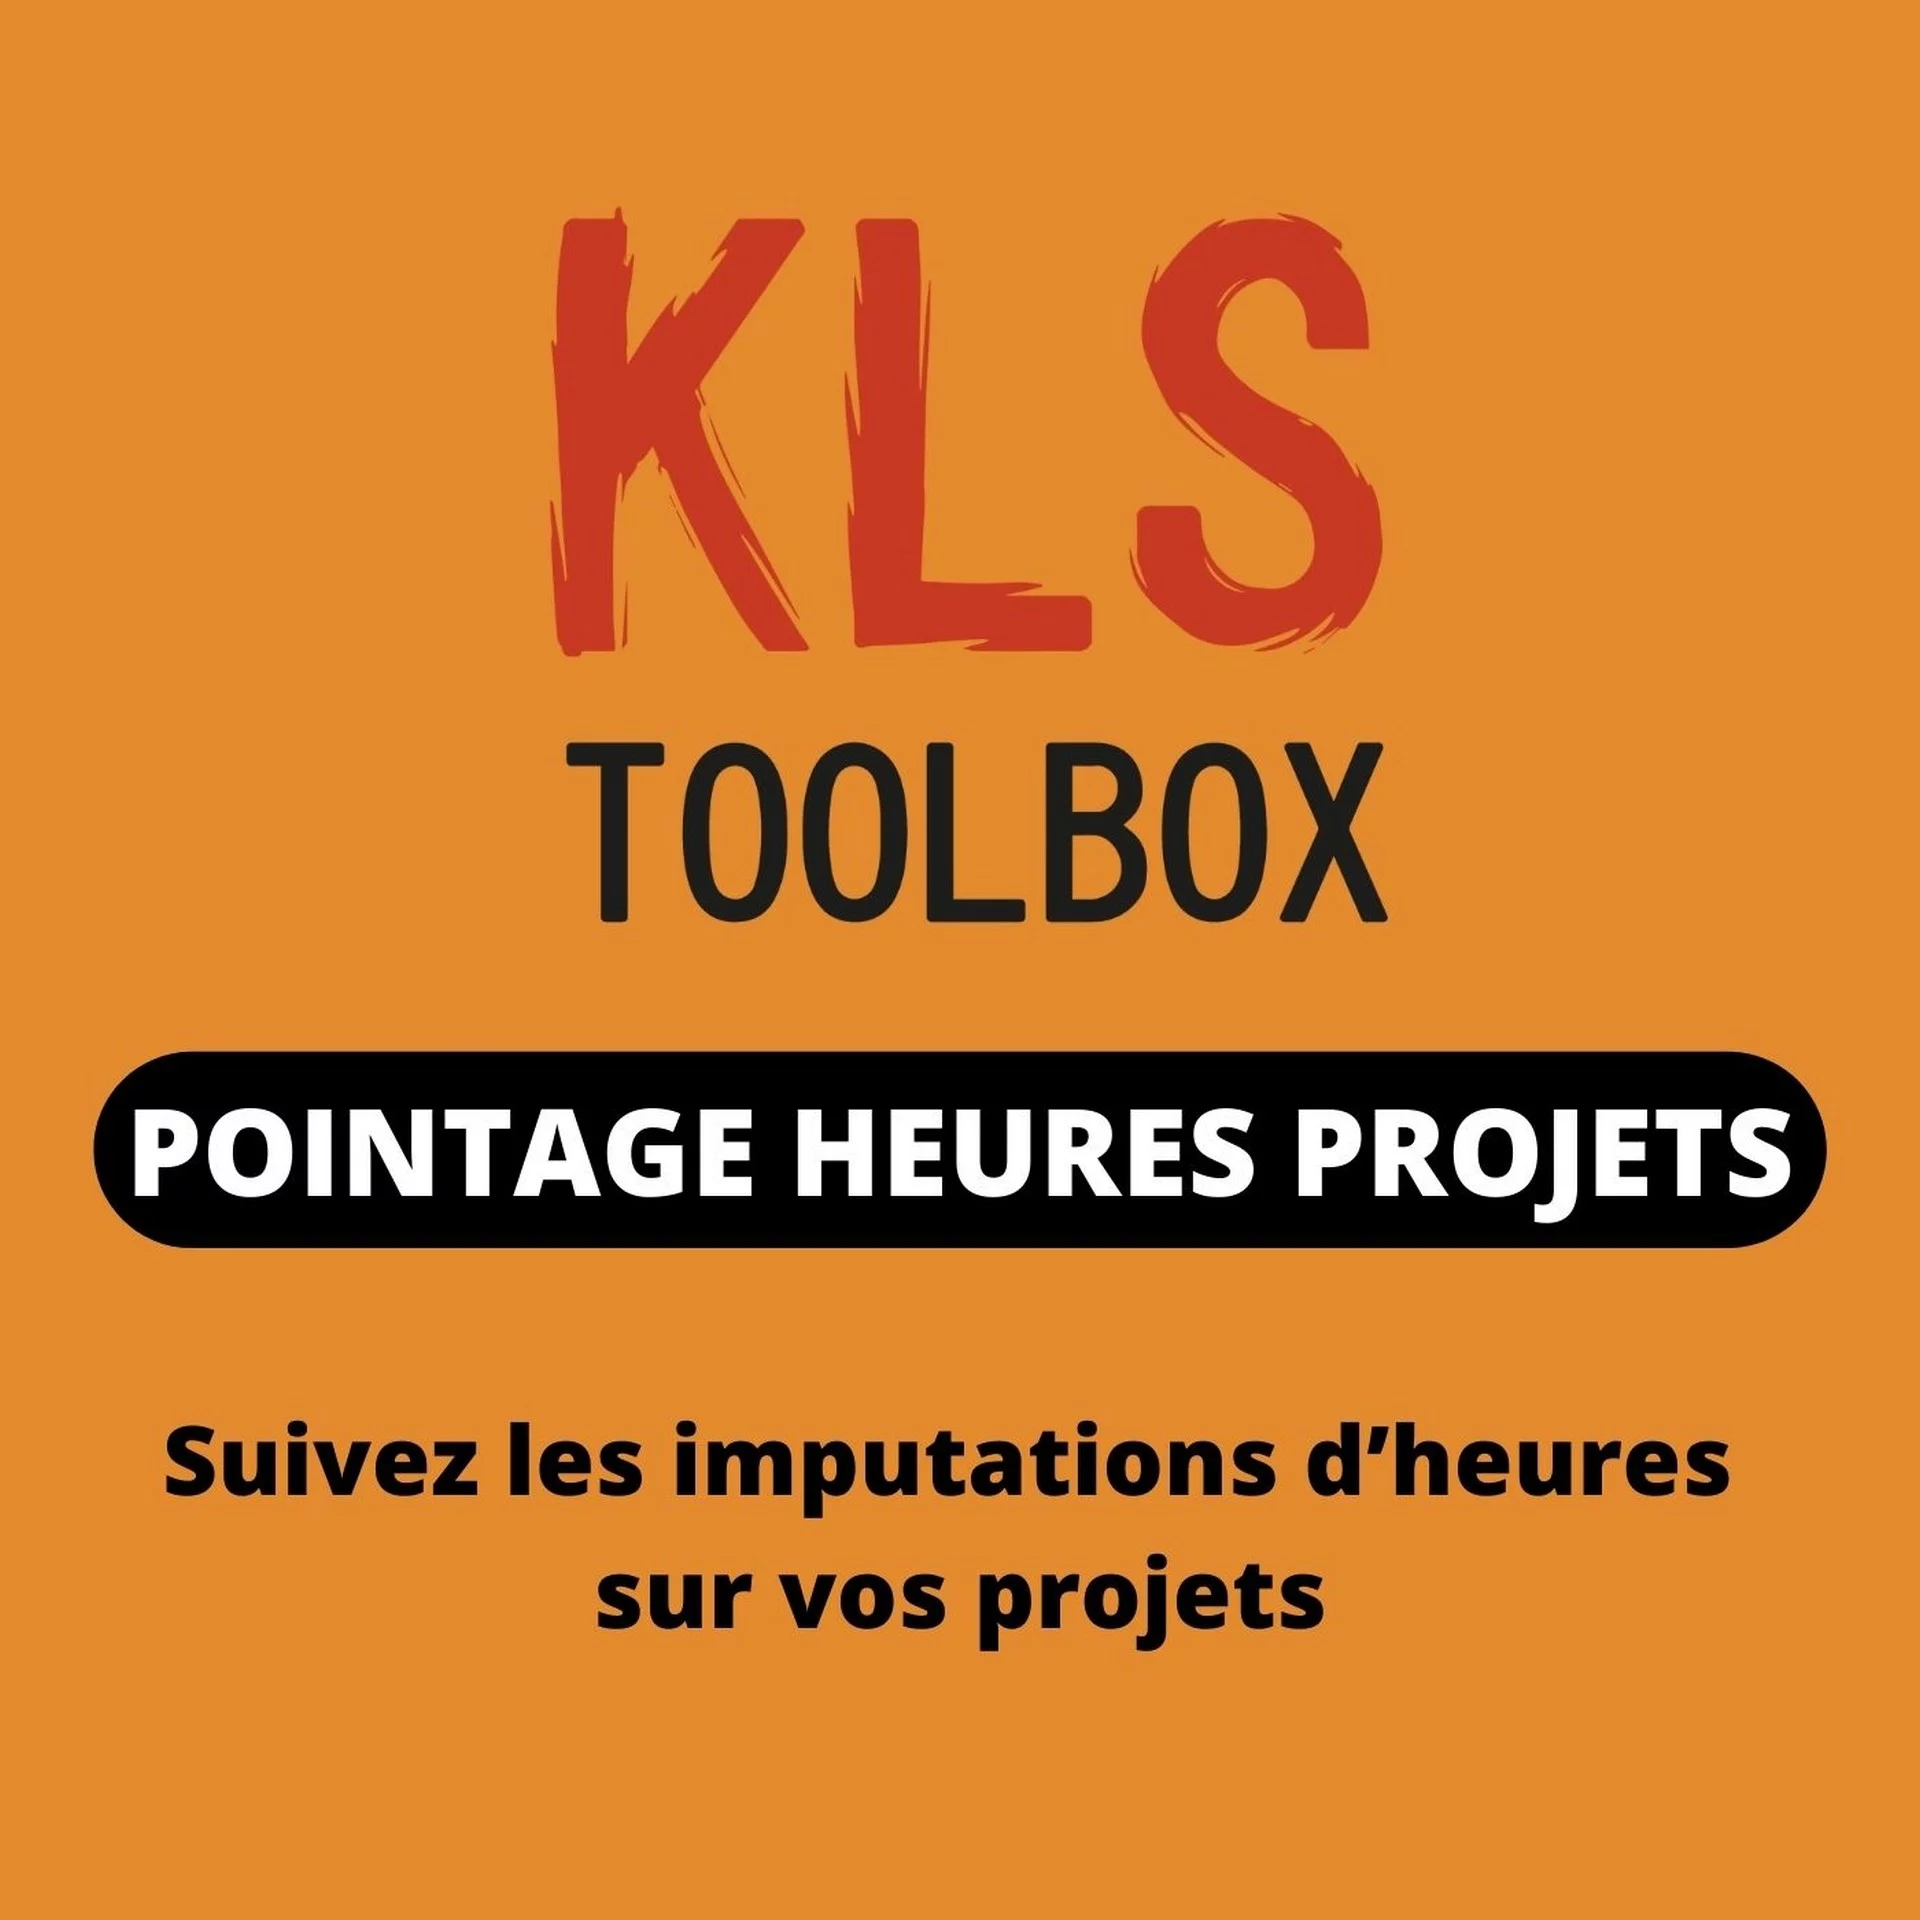 xtep kls toolbox suivi heures projet